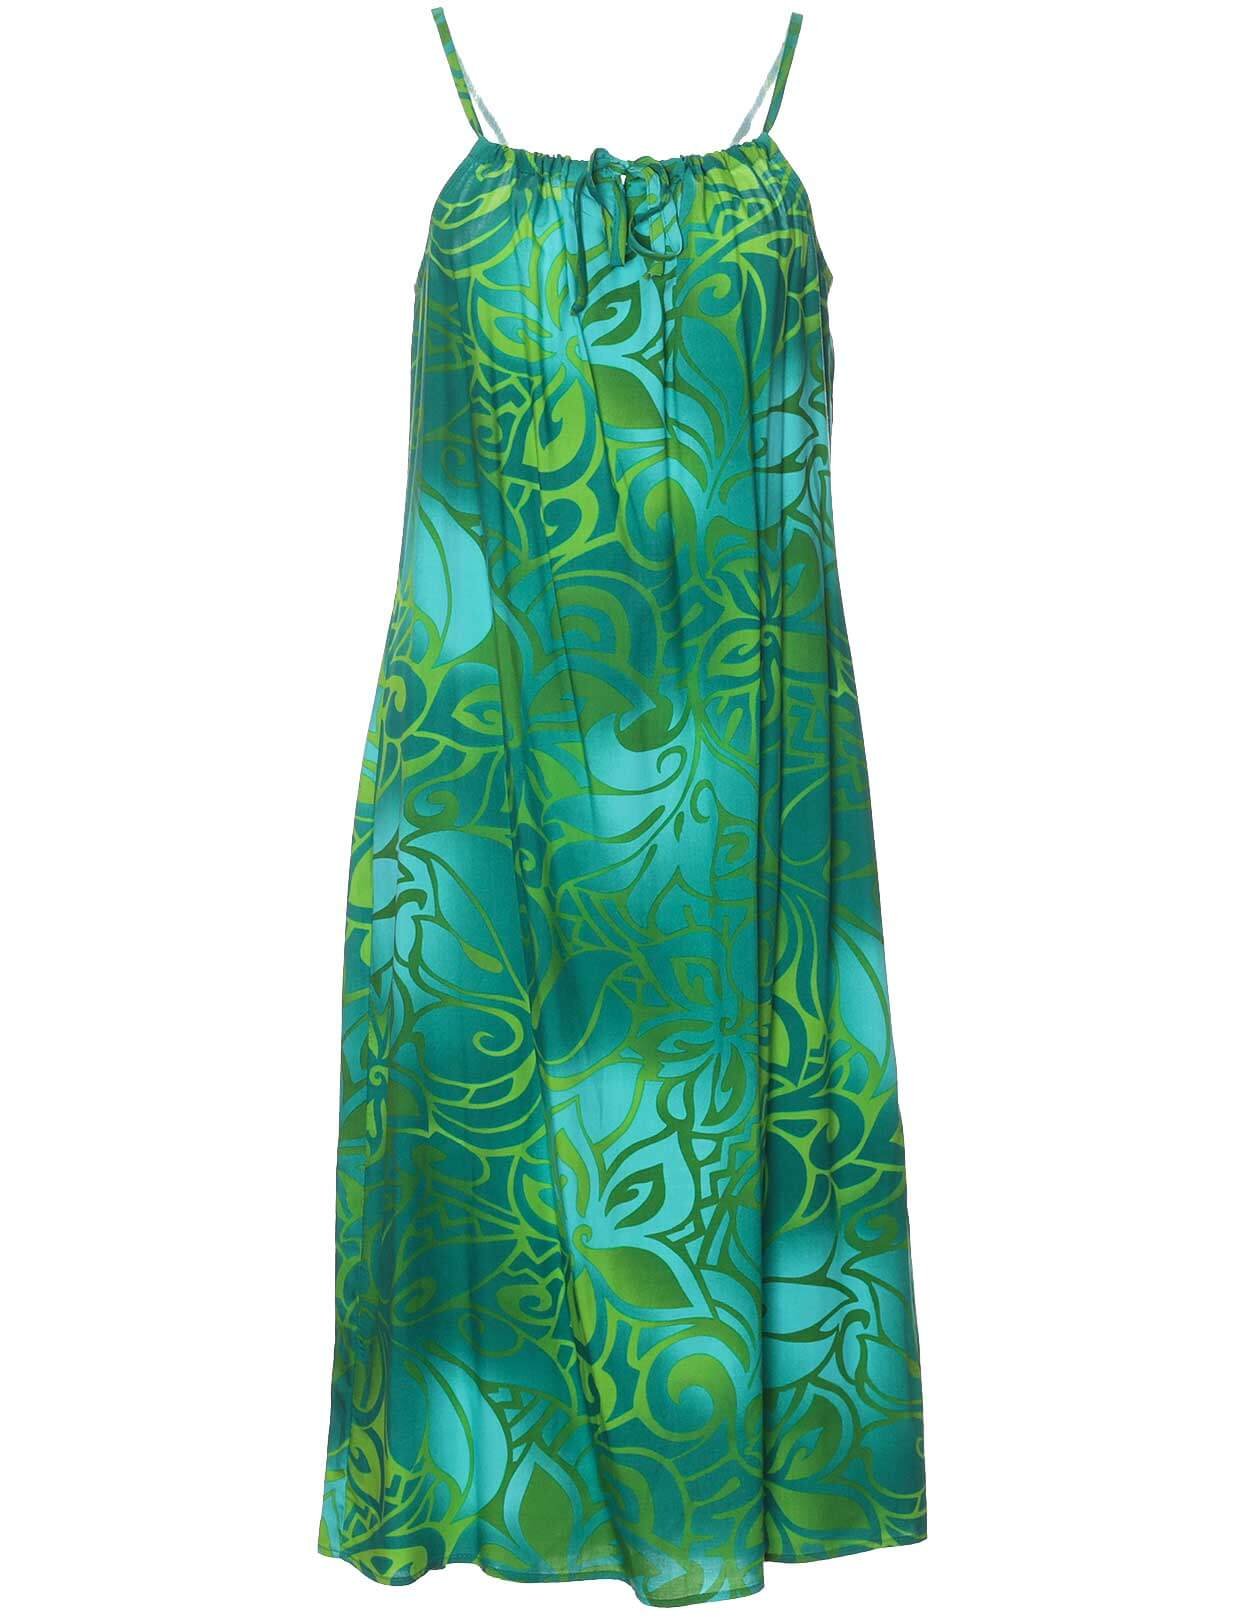 Tribal Style Midi Dress w/Front Tie Straps Green